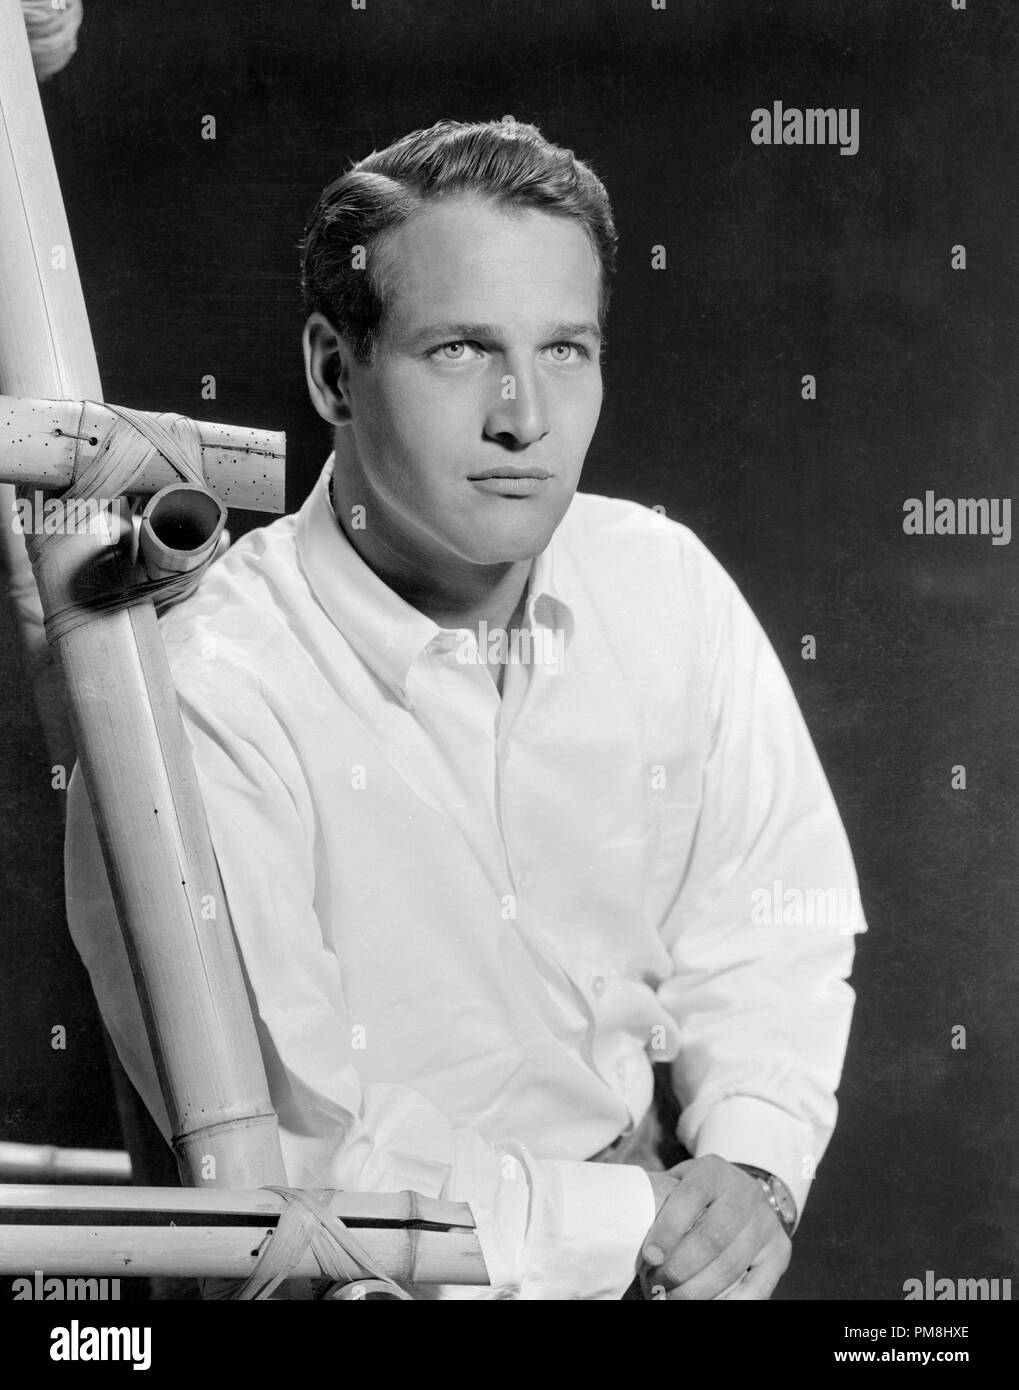 (Archivística Cine Clásico - Paul Newman retrospectiva) Paul Newman, circa 1955. Archivo de referencia # 31510 037tha Foto de stock